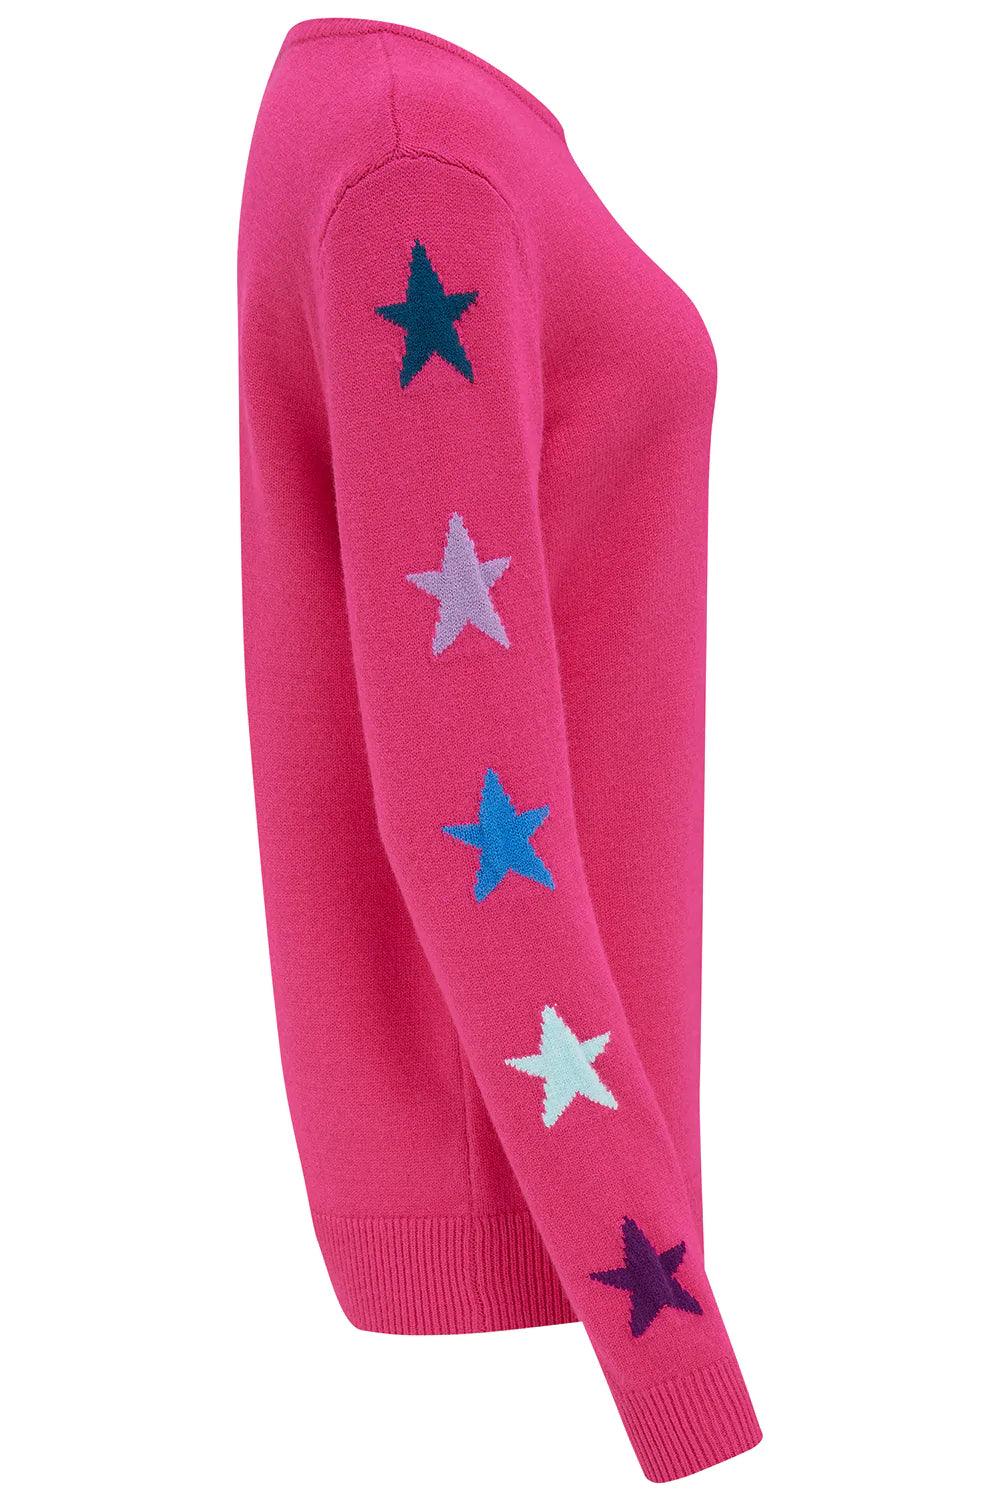 Jersey Stacey Pink Star Sleeve - ECRU